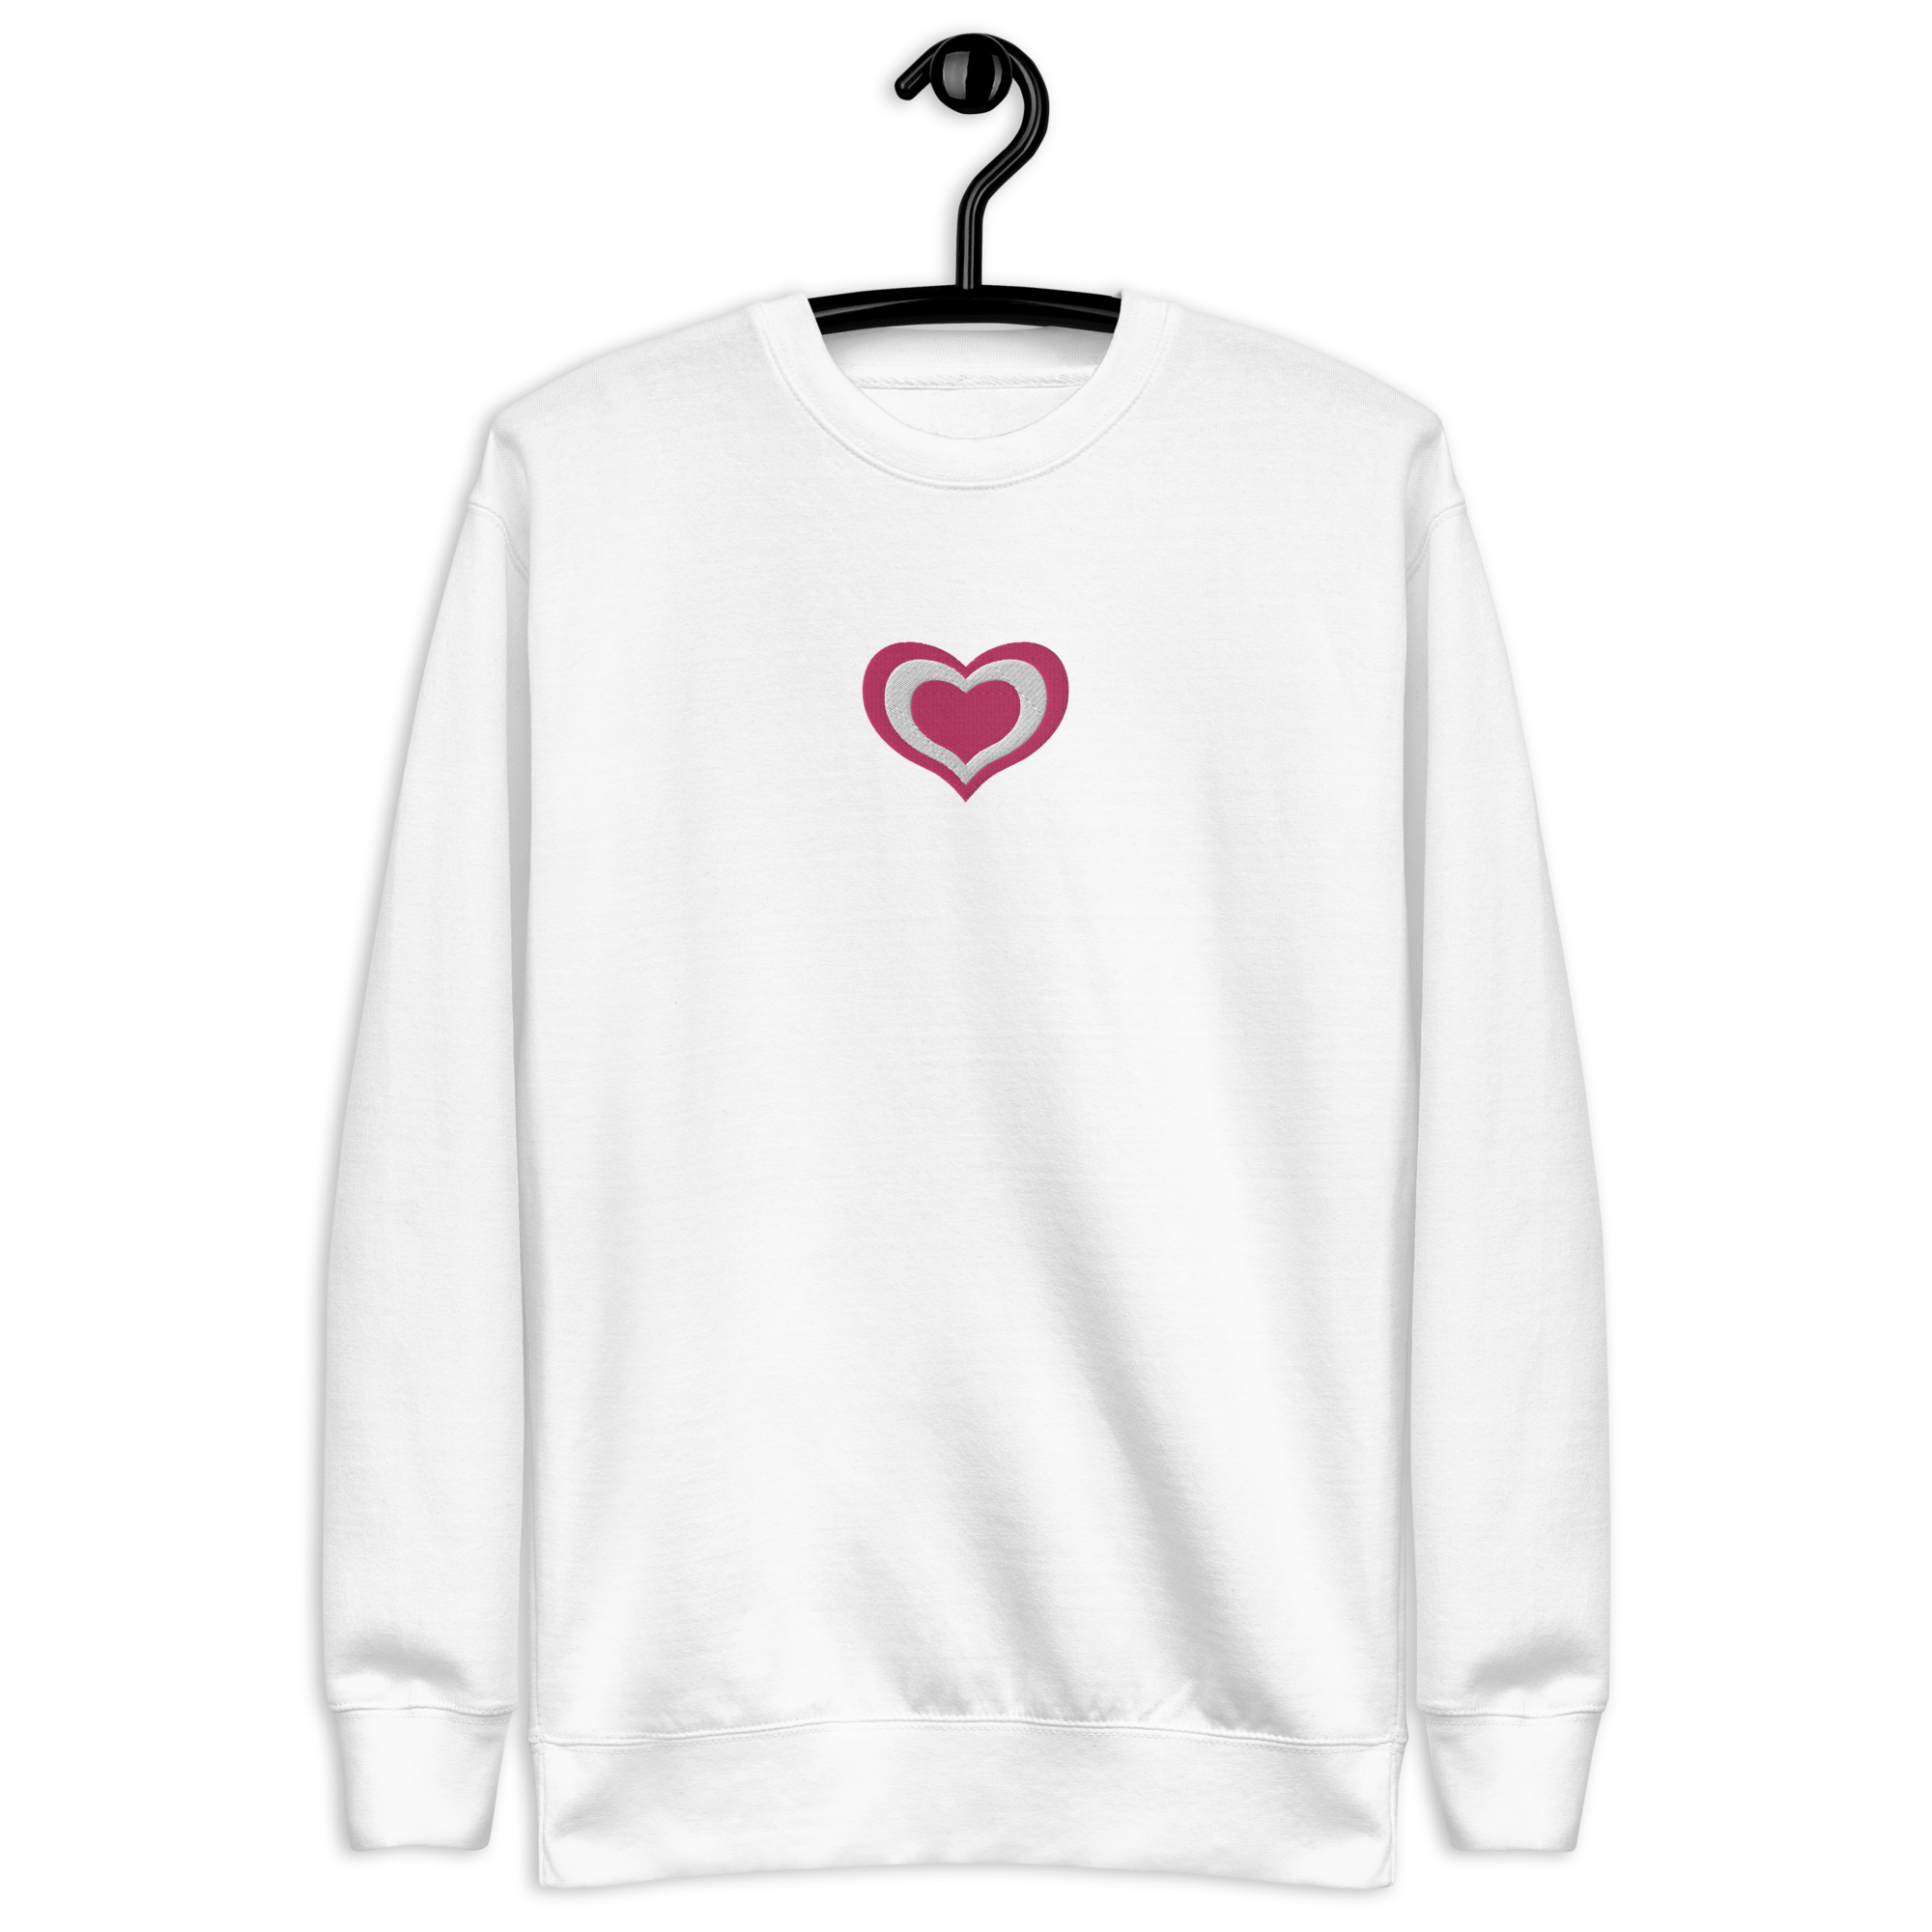 Lovely Heart Embroidery Sweatshirt